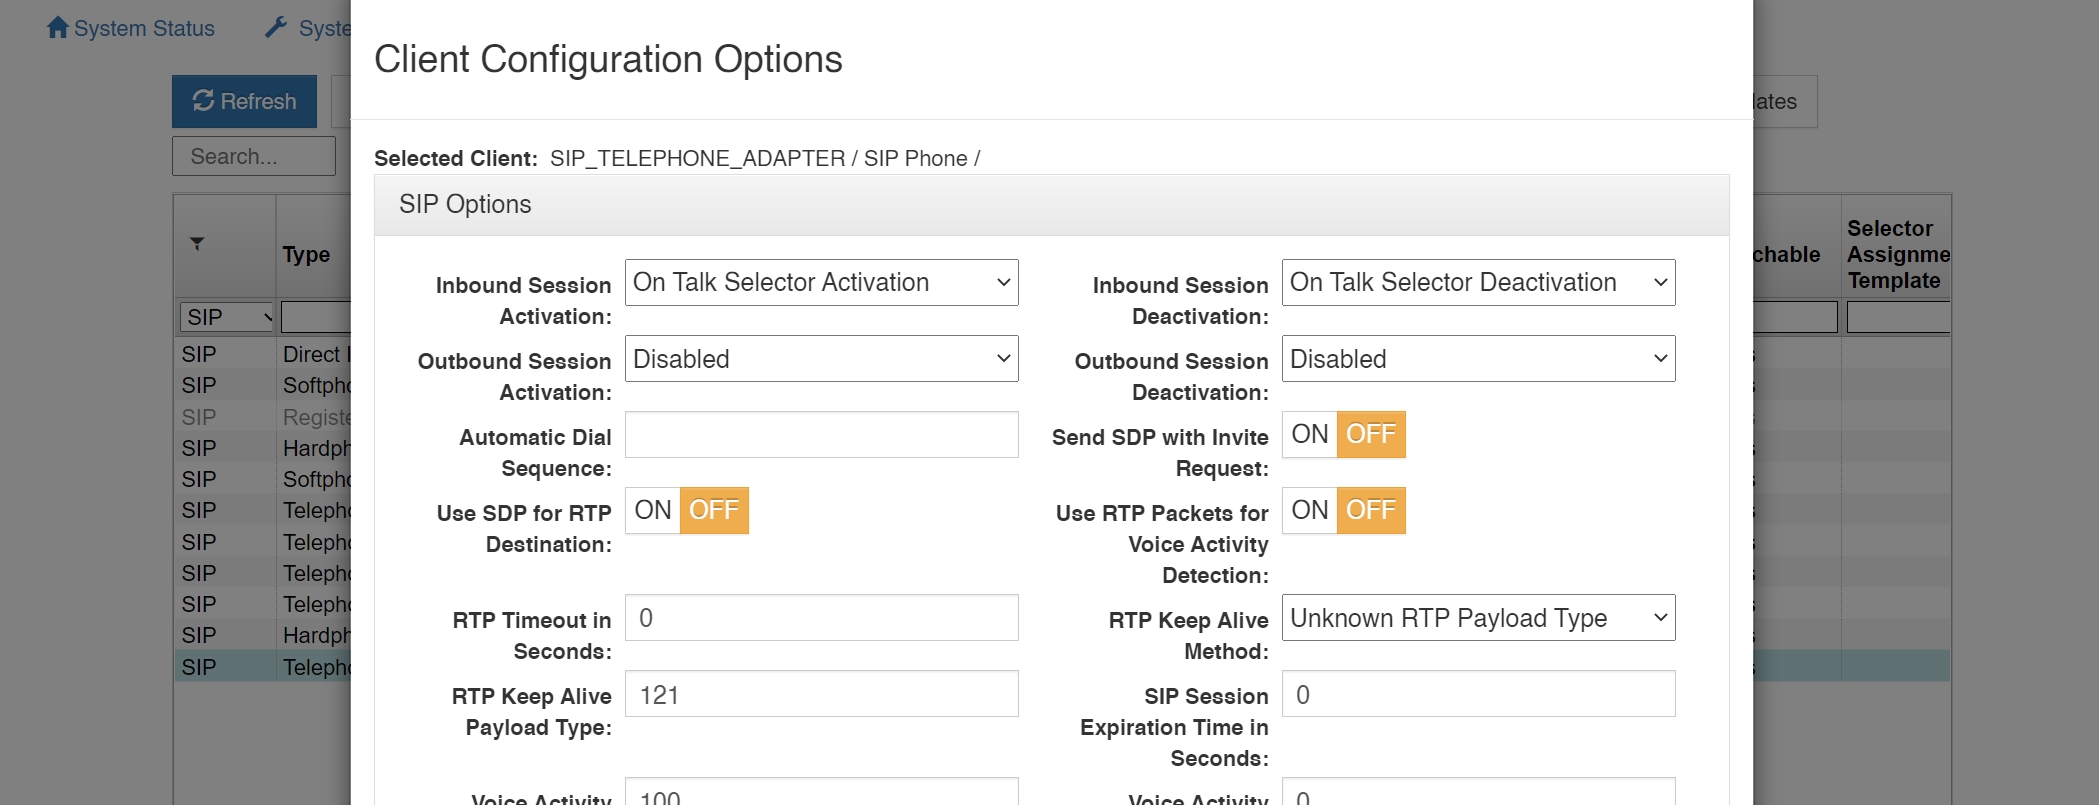 screenshot of vcom system administration sip client configuration options